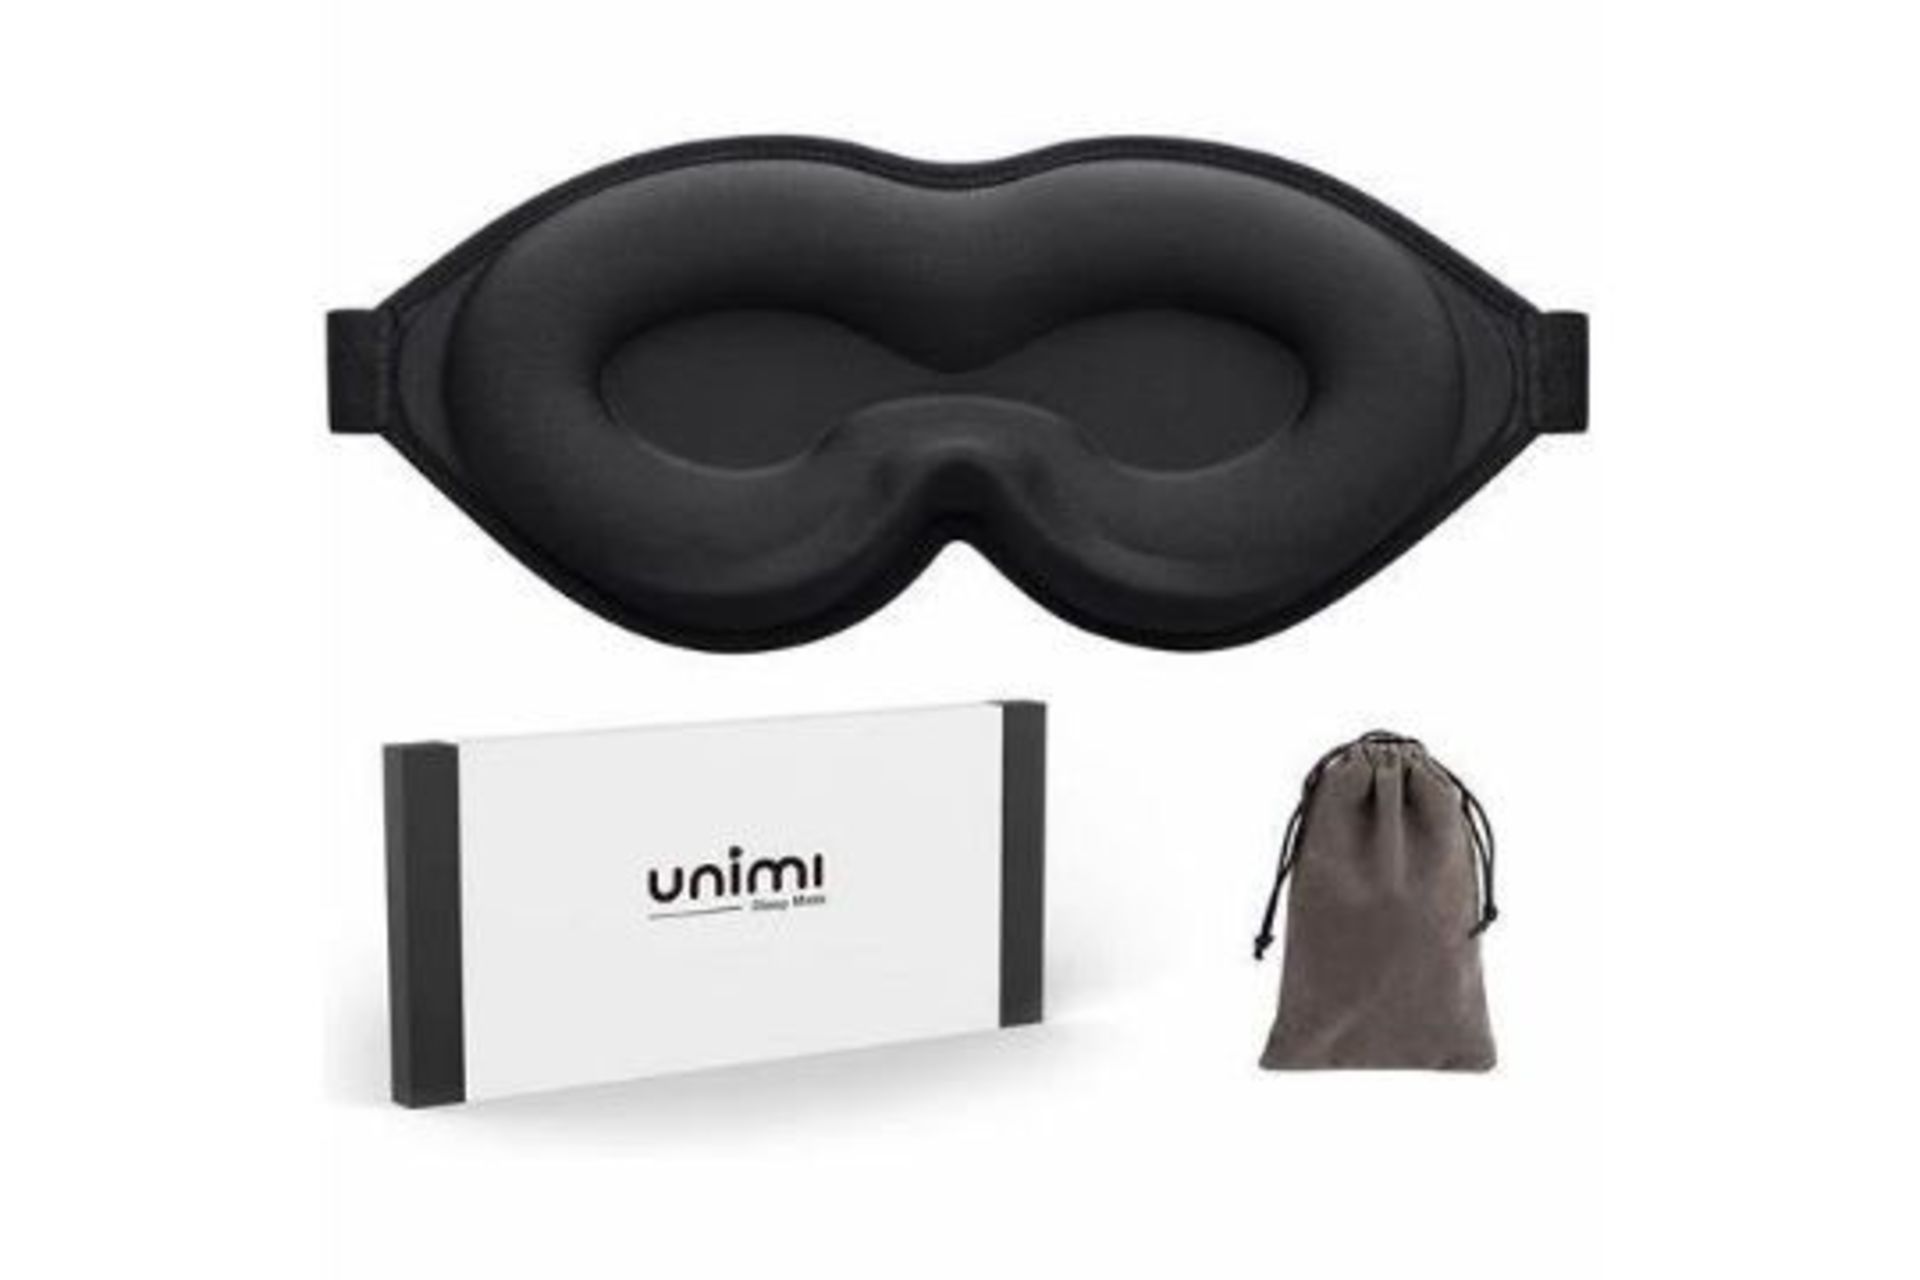 x2 New Umini Sleep Mask - RRP £15.99 EACH - Image 2 of 2